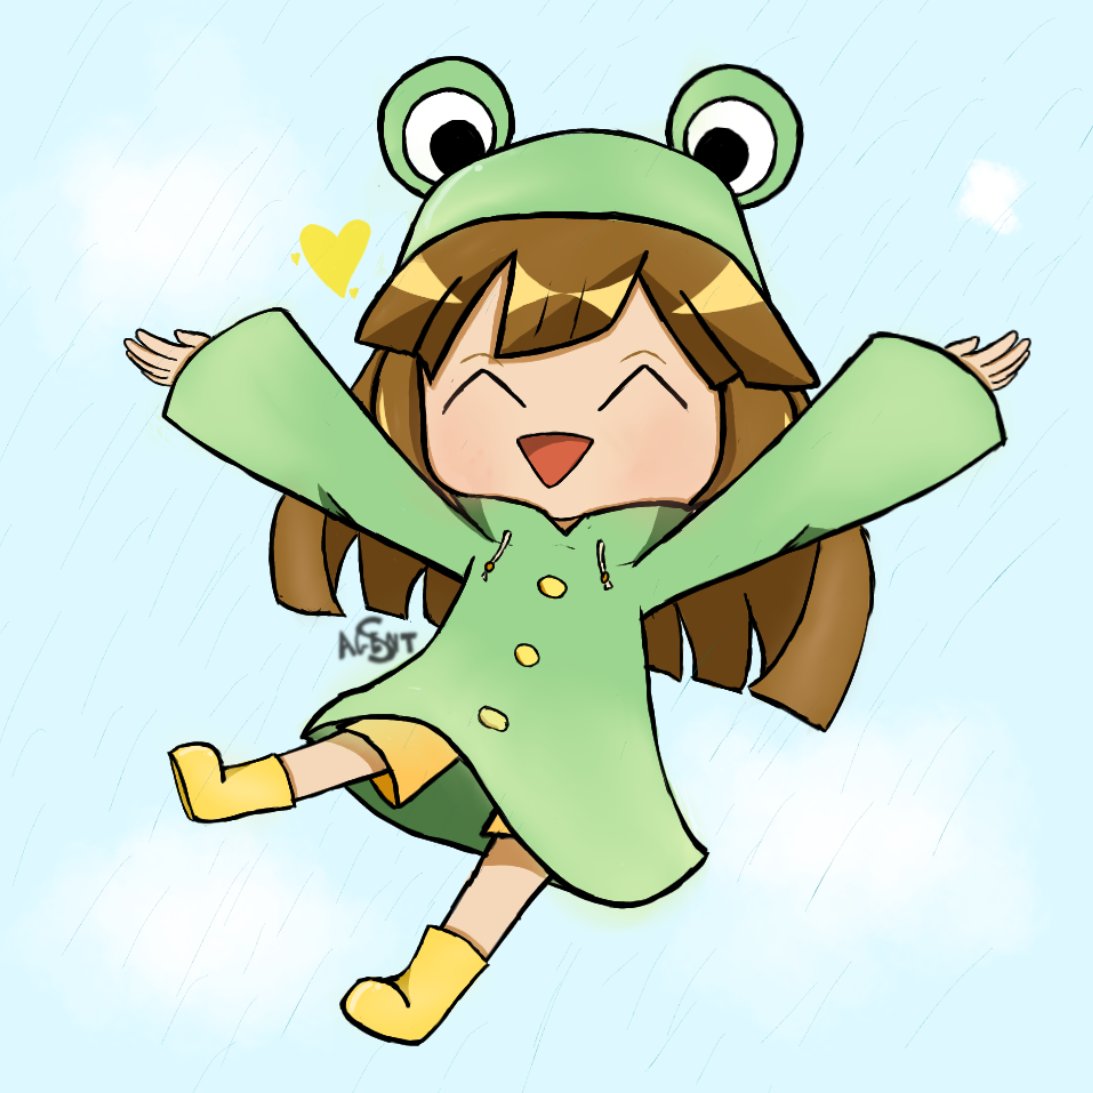 A happy frog on a rainy day💛🐸☔️

#イナズマイレブン #イナズマイレブンGO #InazumaEleven #InazumaElevenGO